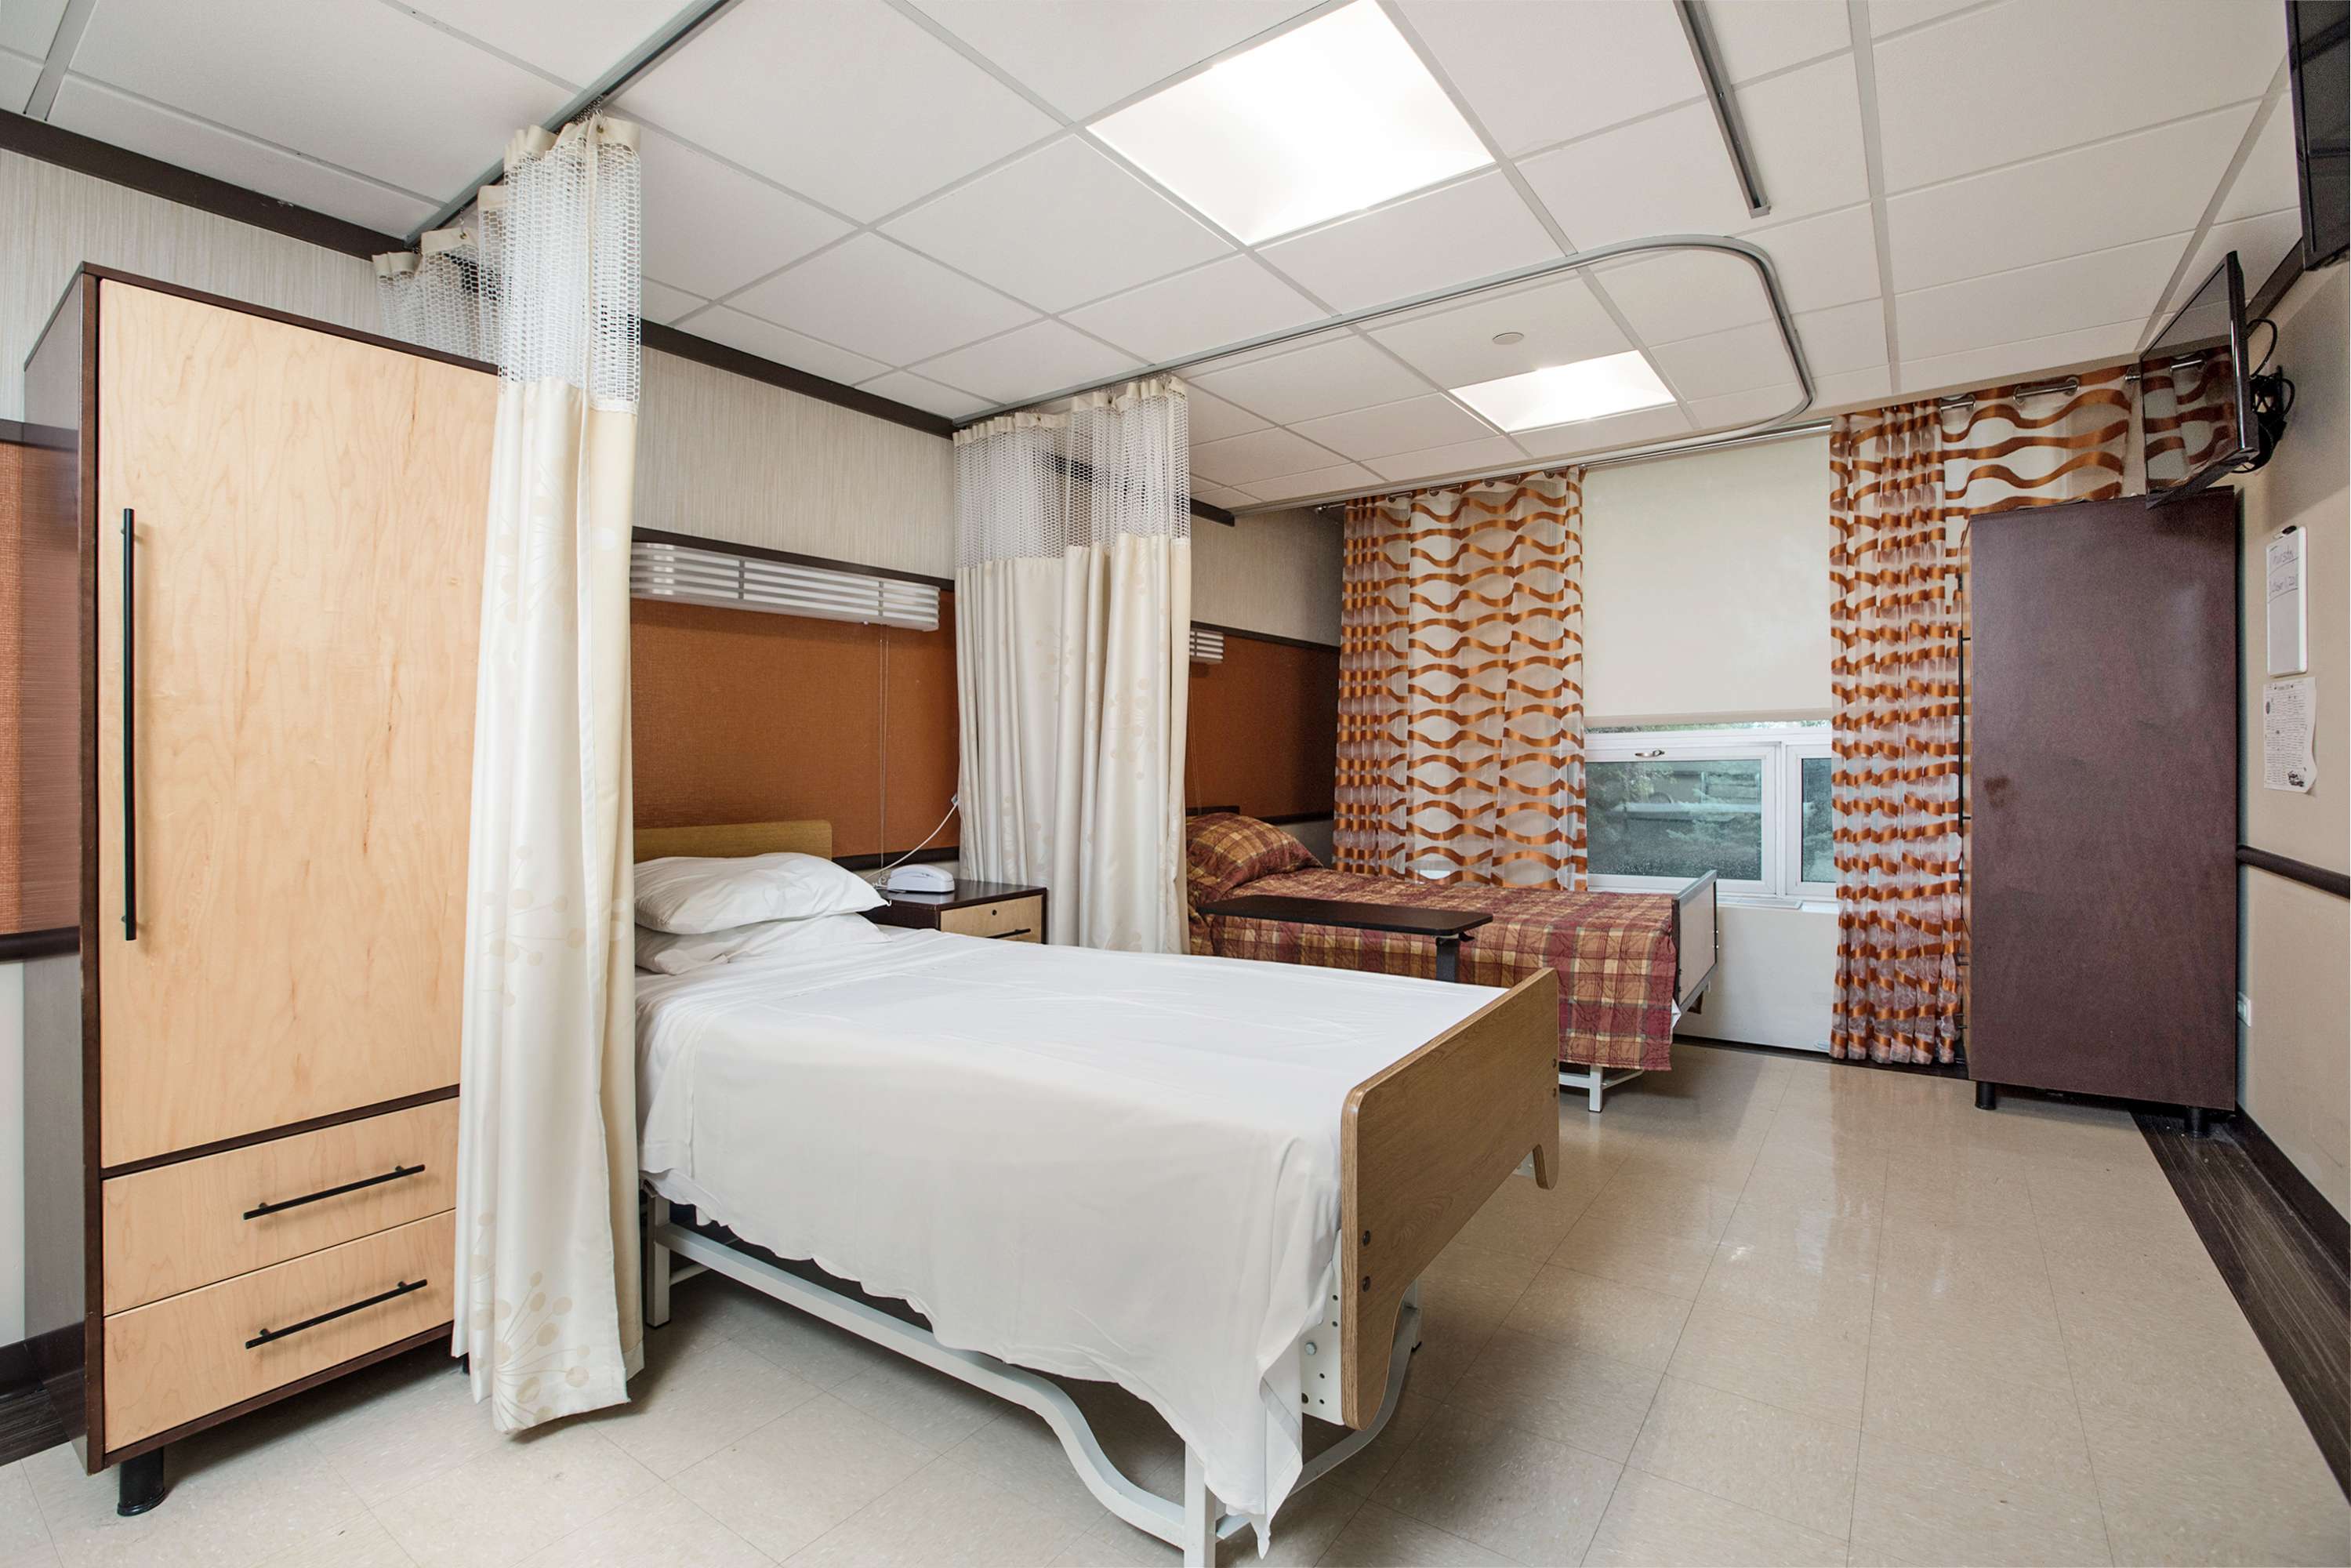 White Plains Center for Nursing Care - Typical Bedroom